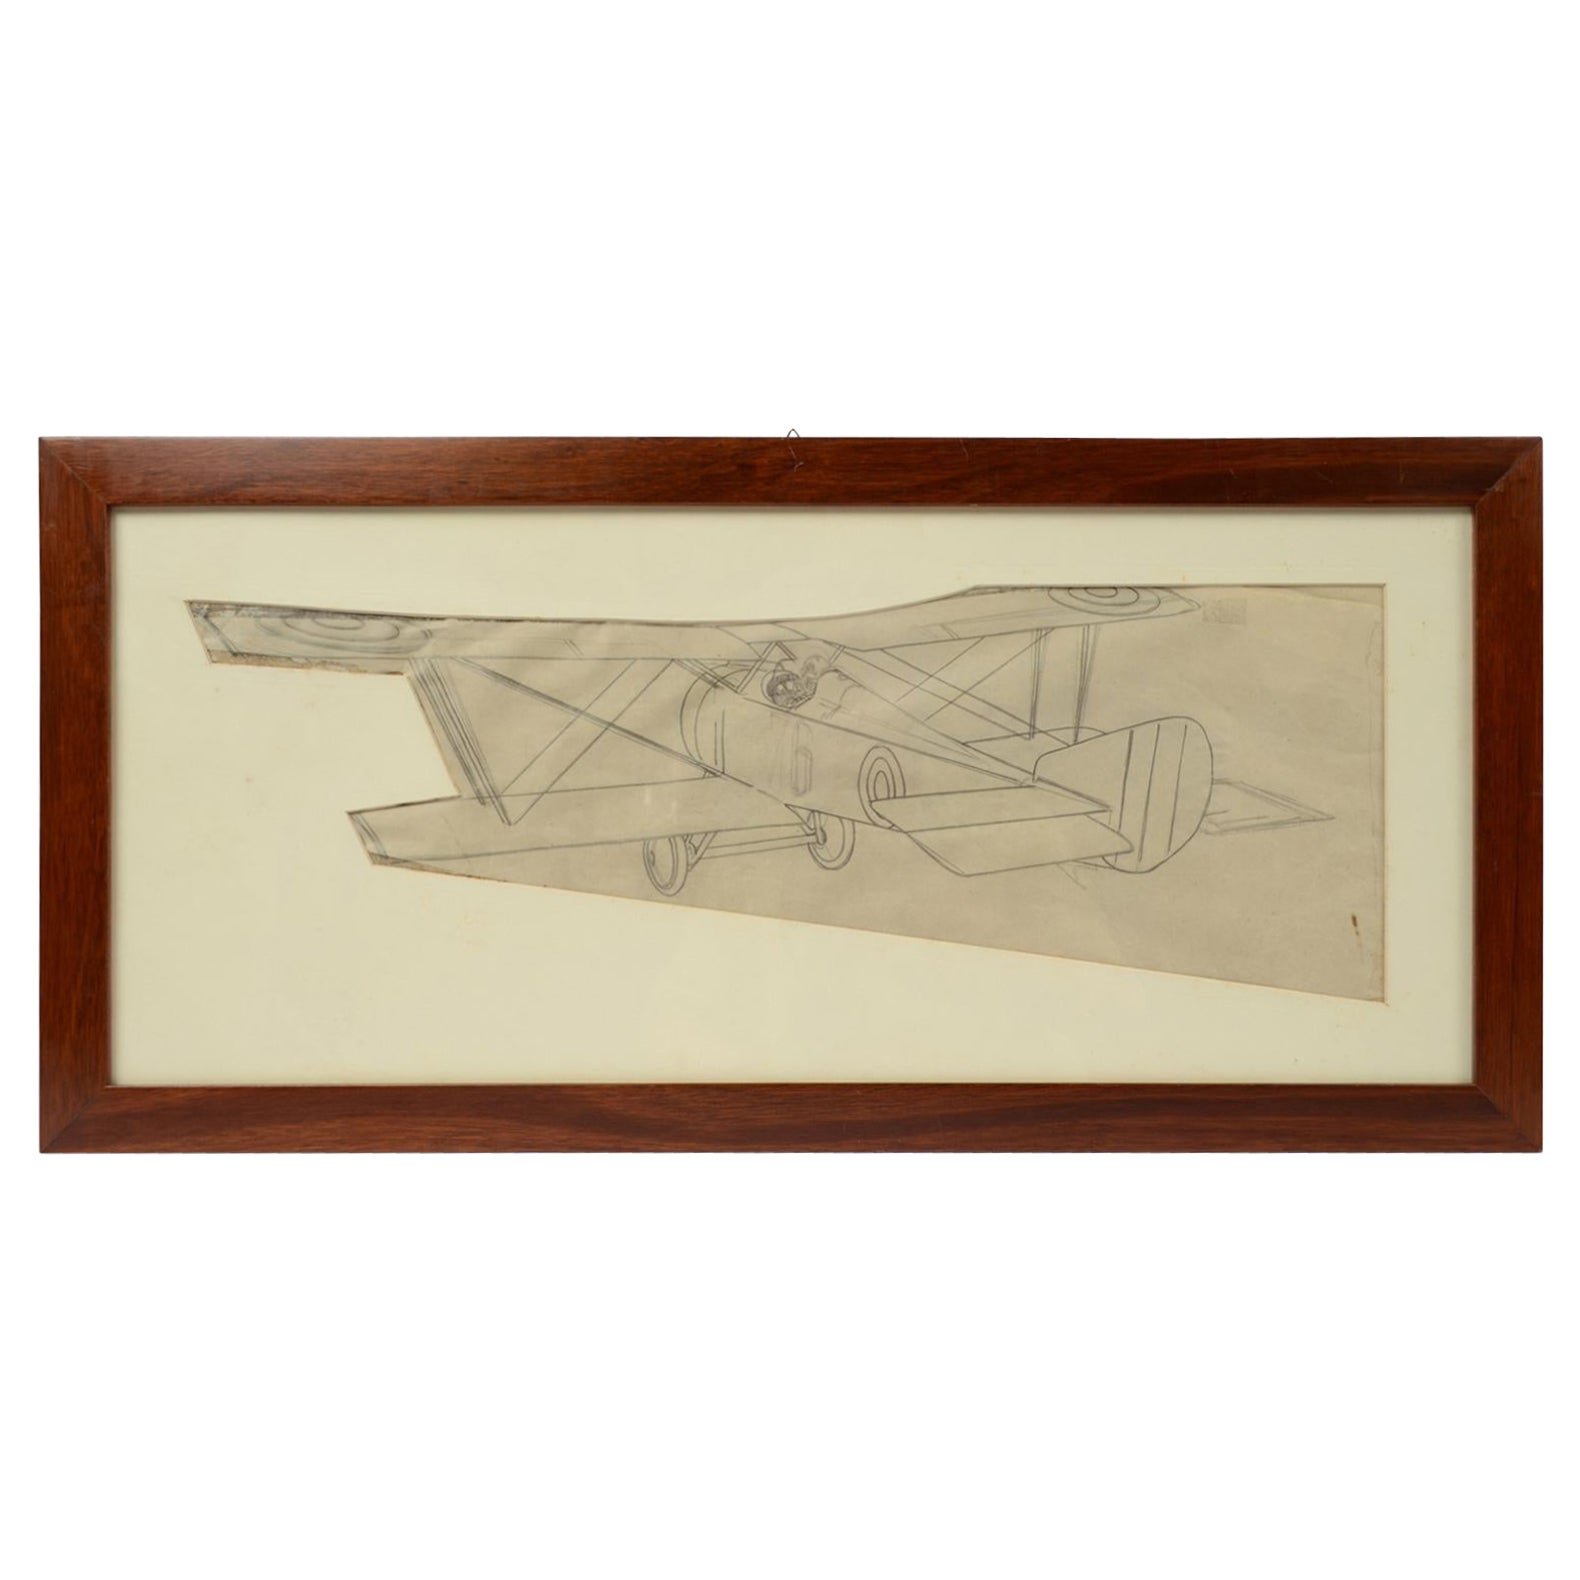 Vintage Original Pencil Aviation Drawing Depicting a Hanriot HD 1 WWI Aircraft